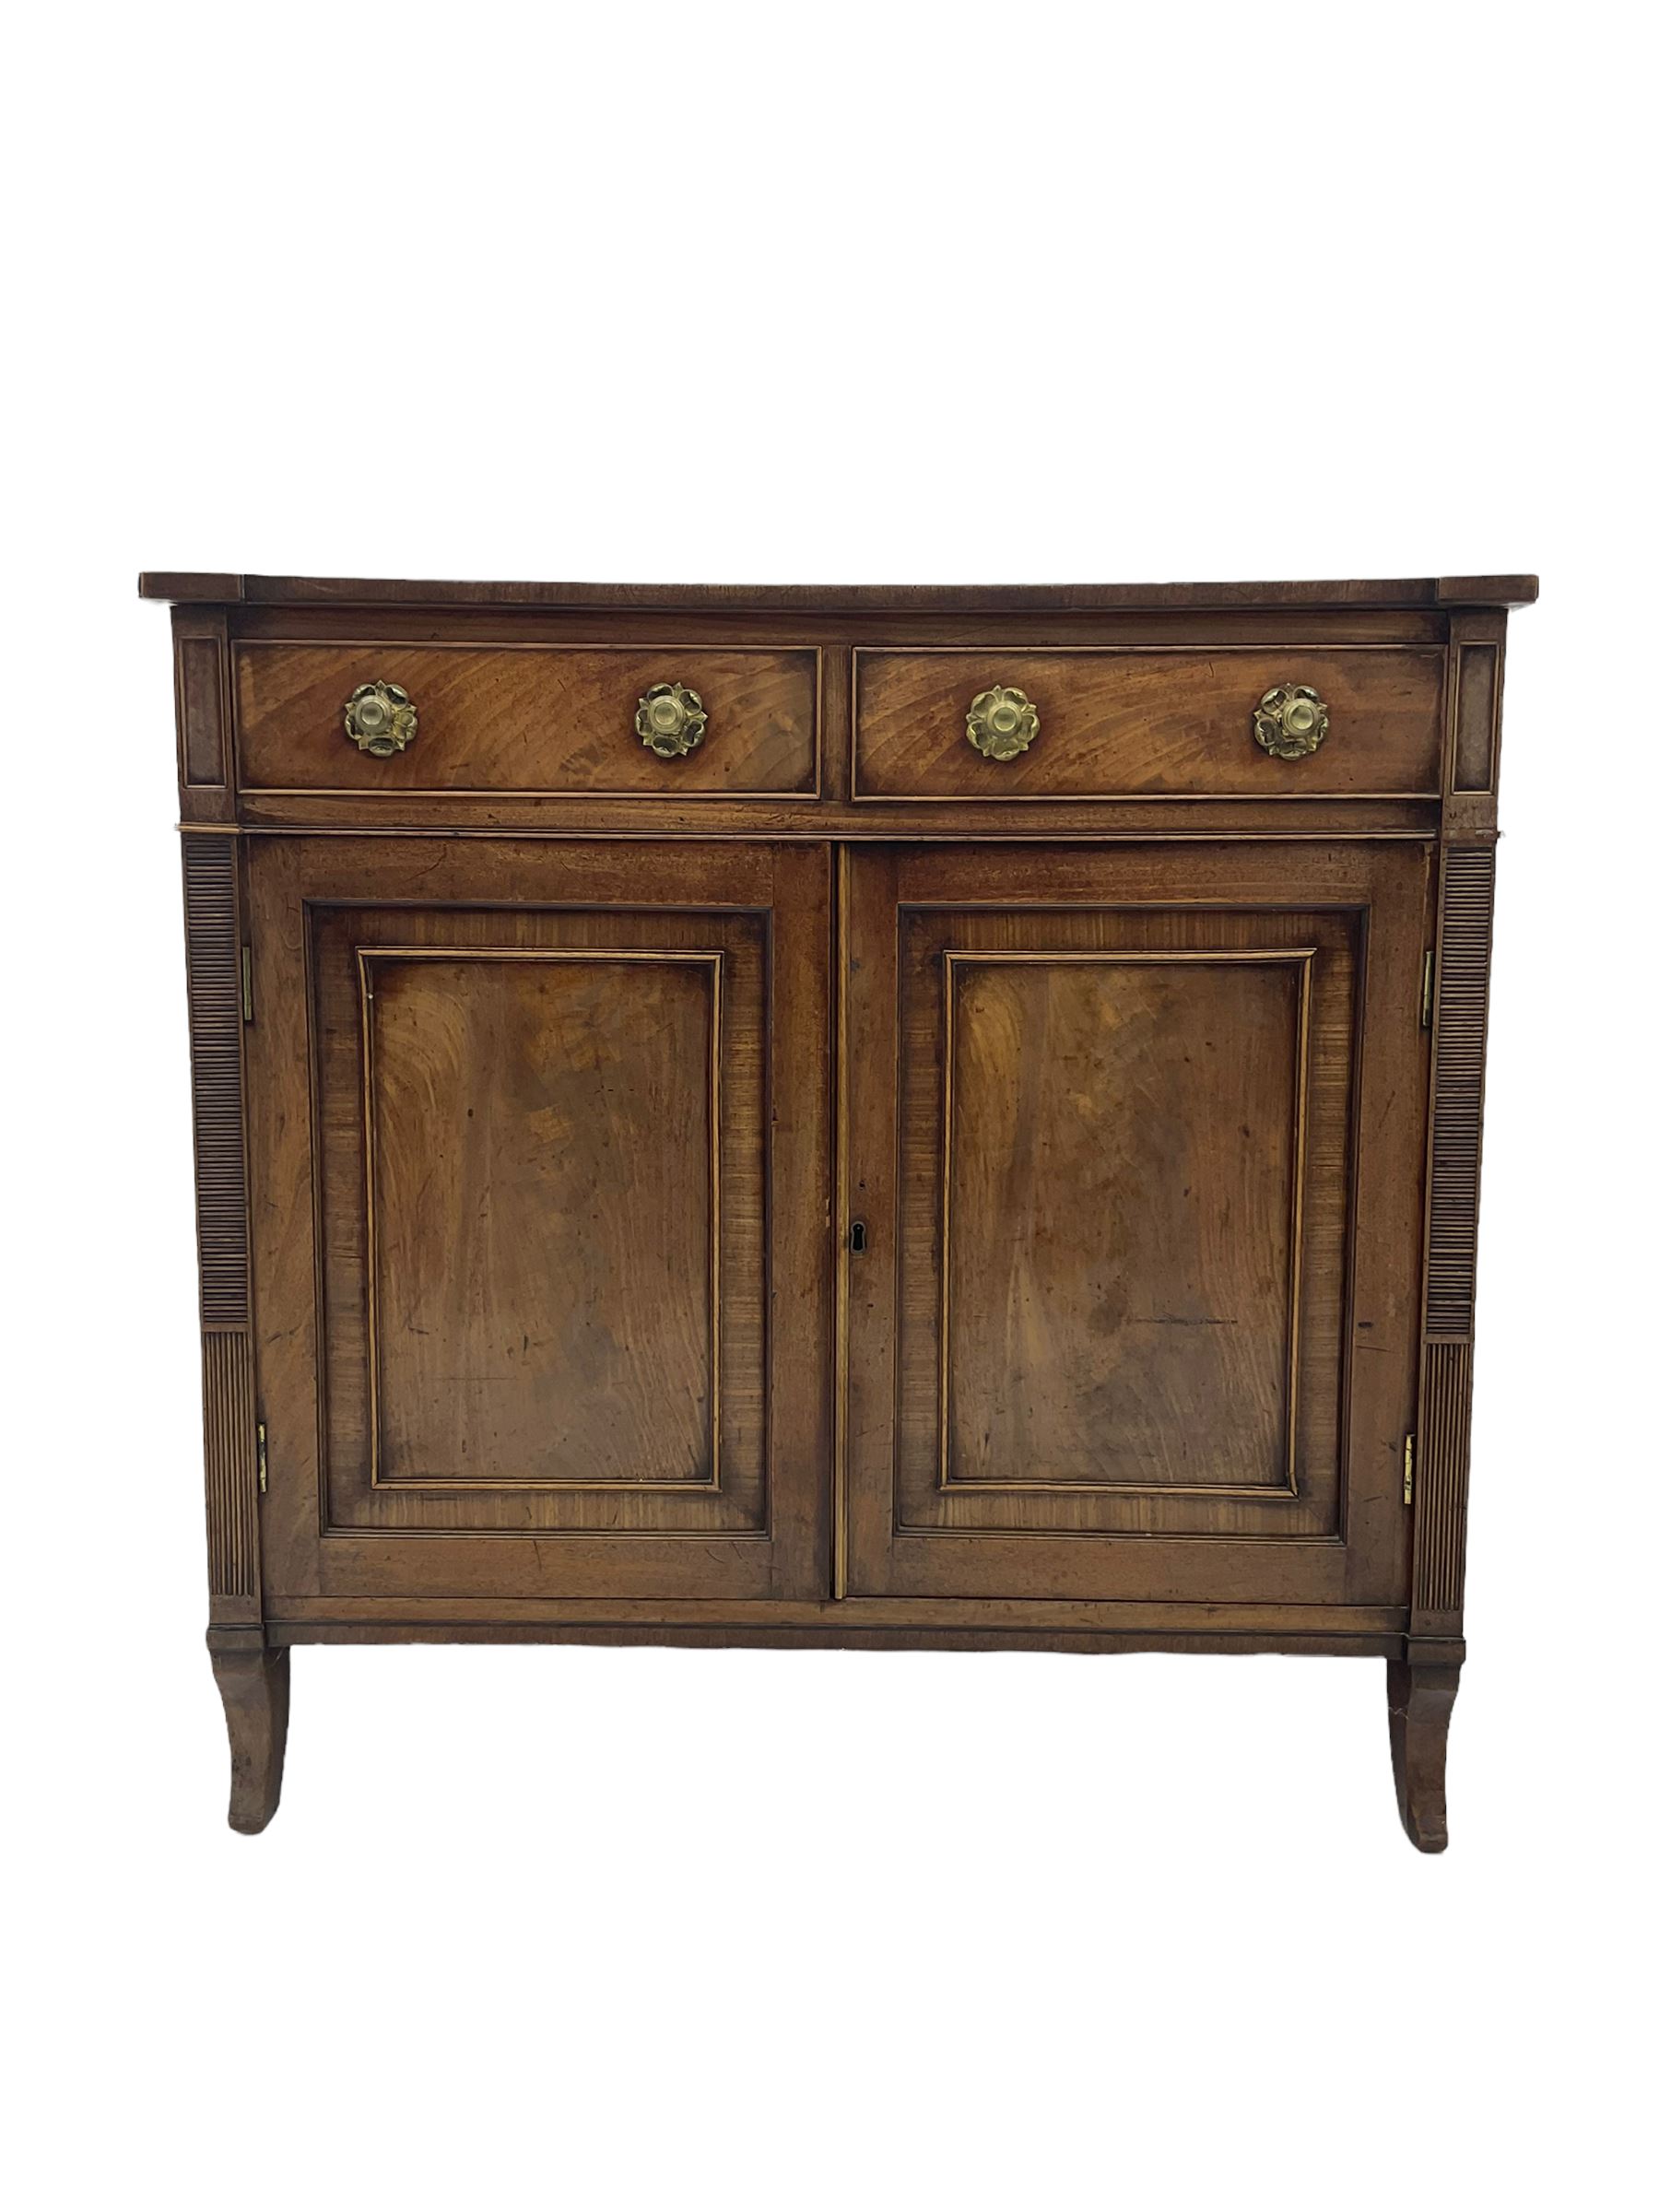 Regency period mahogany side cabinet